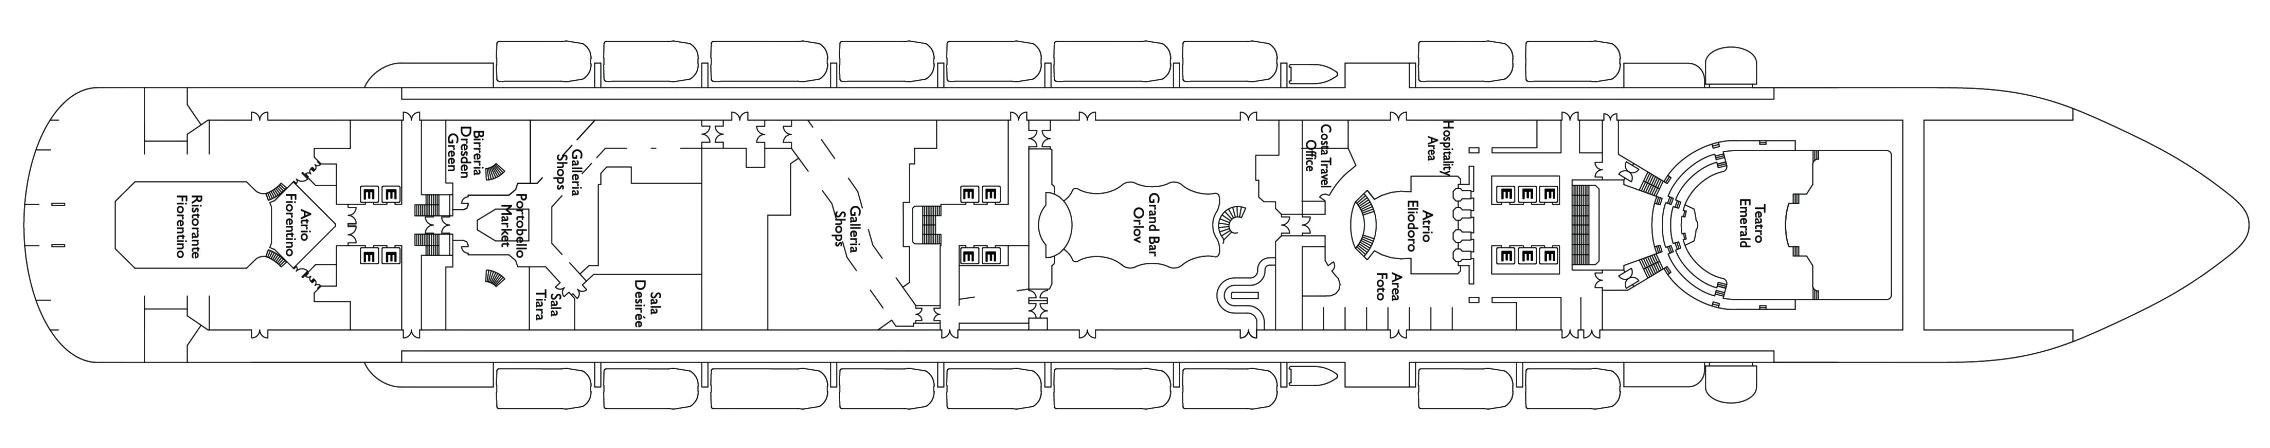 Планы палуб Costa Diadema: Deck 4 Perla Di Venere